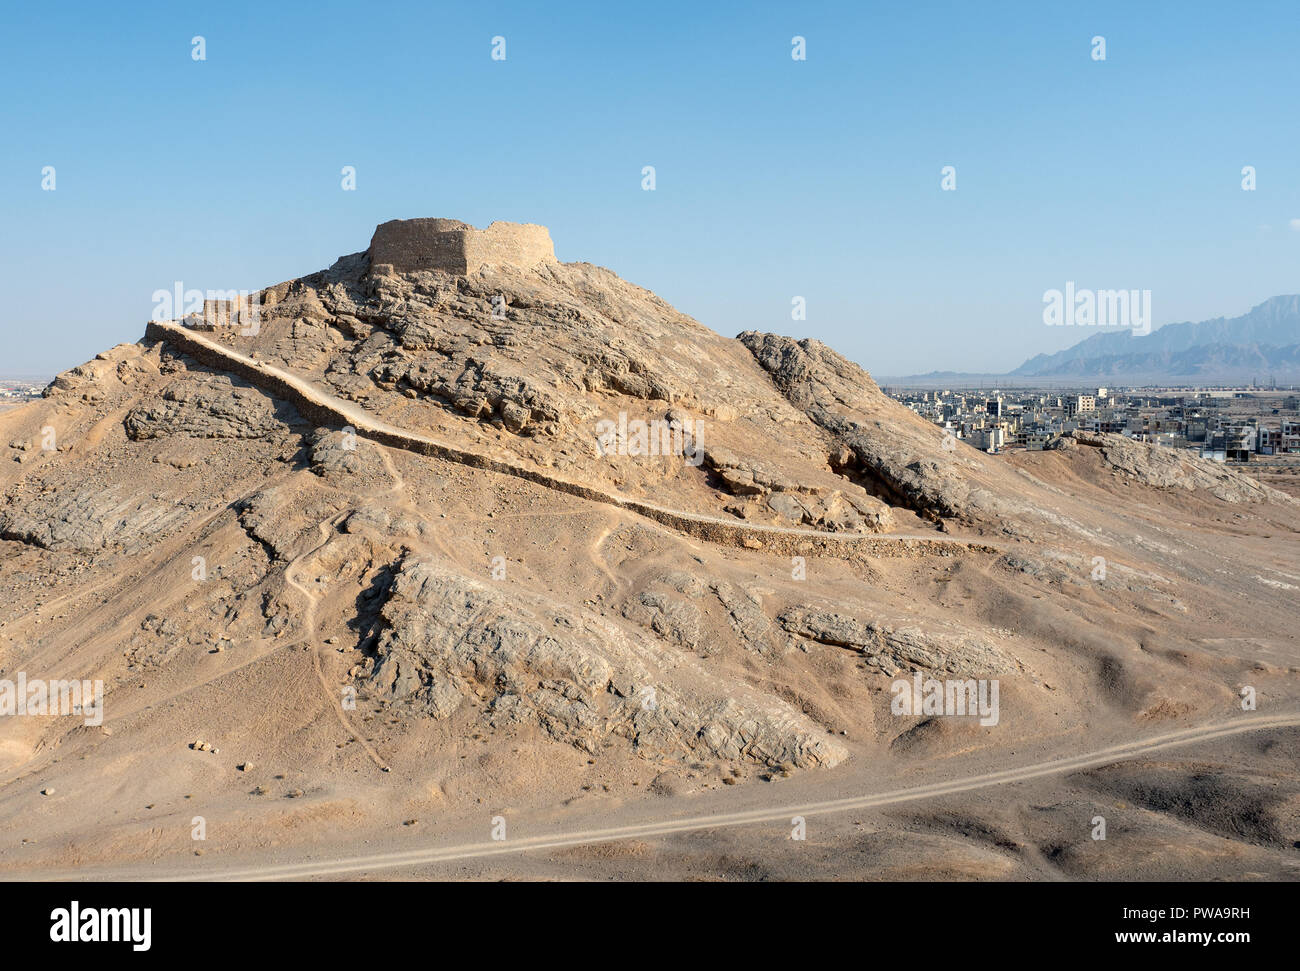 Tower of silence, zoroastrian burial site, Yazd, Iran Stock Photo